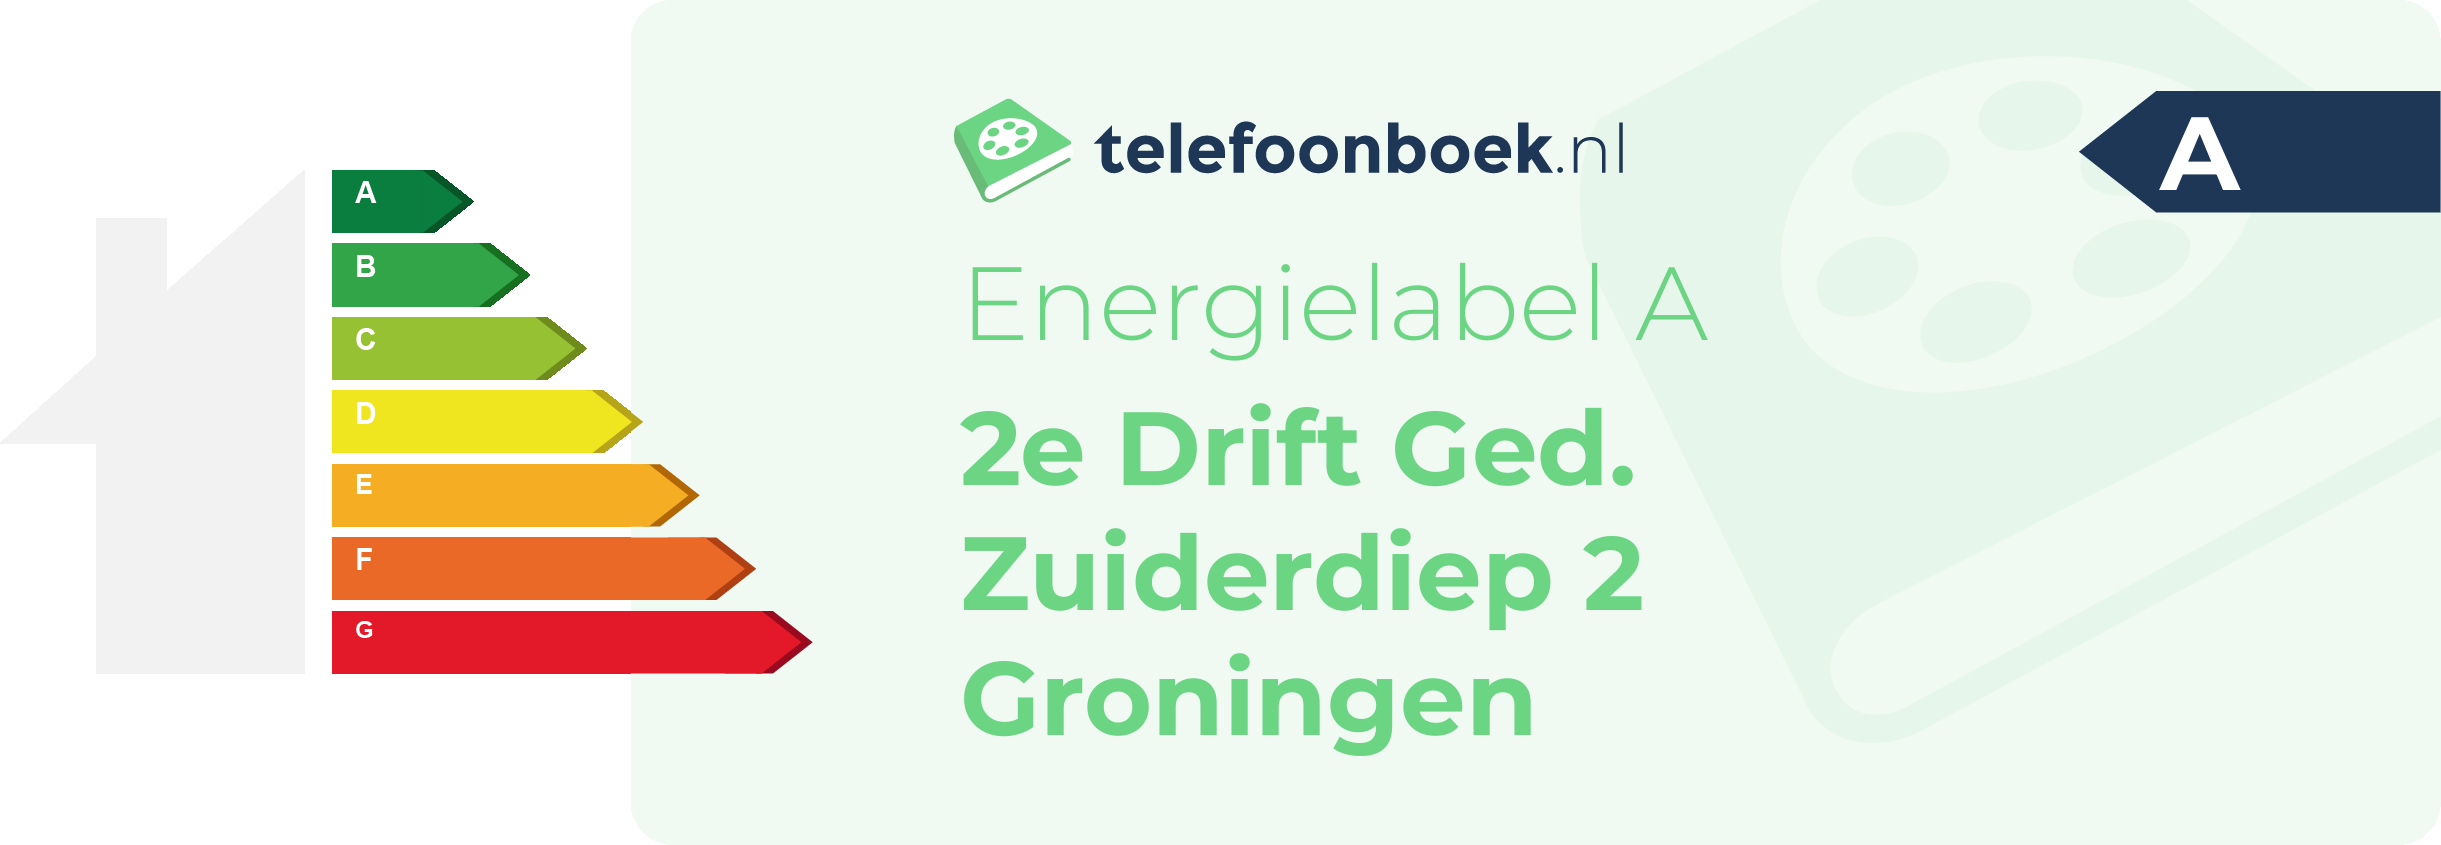 Energielabel 2e Drift Ged. Zuiderdiep 2 Groningen